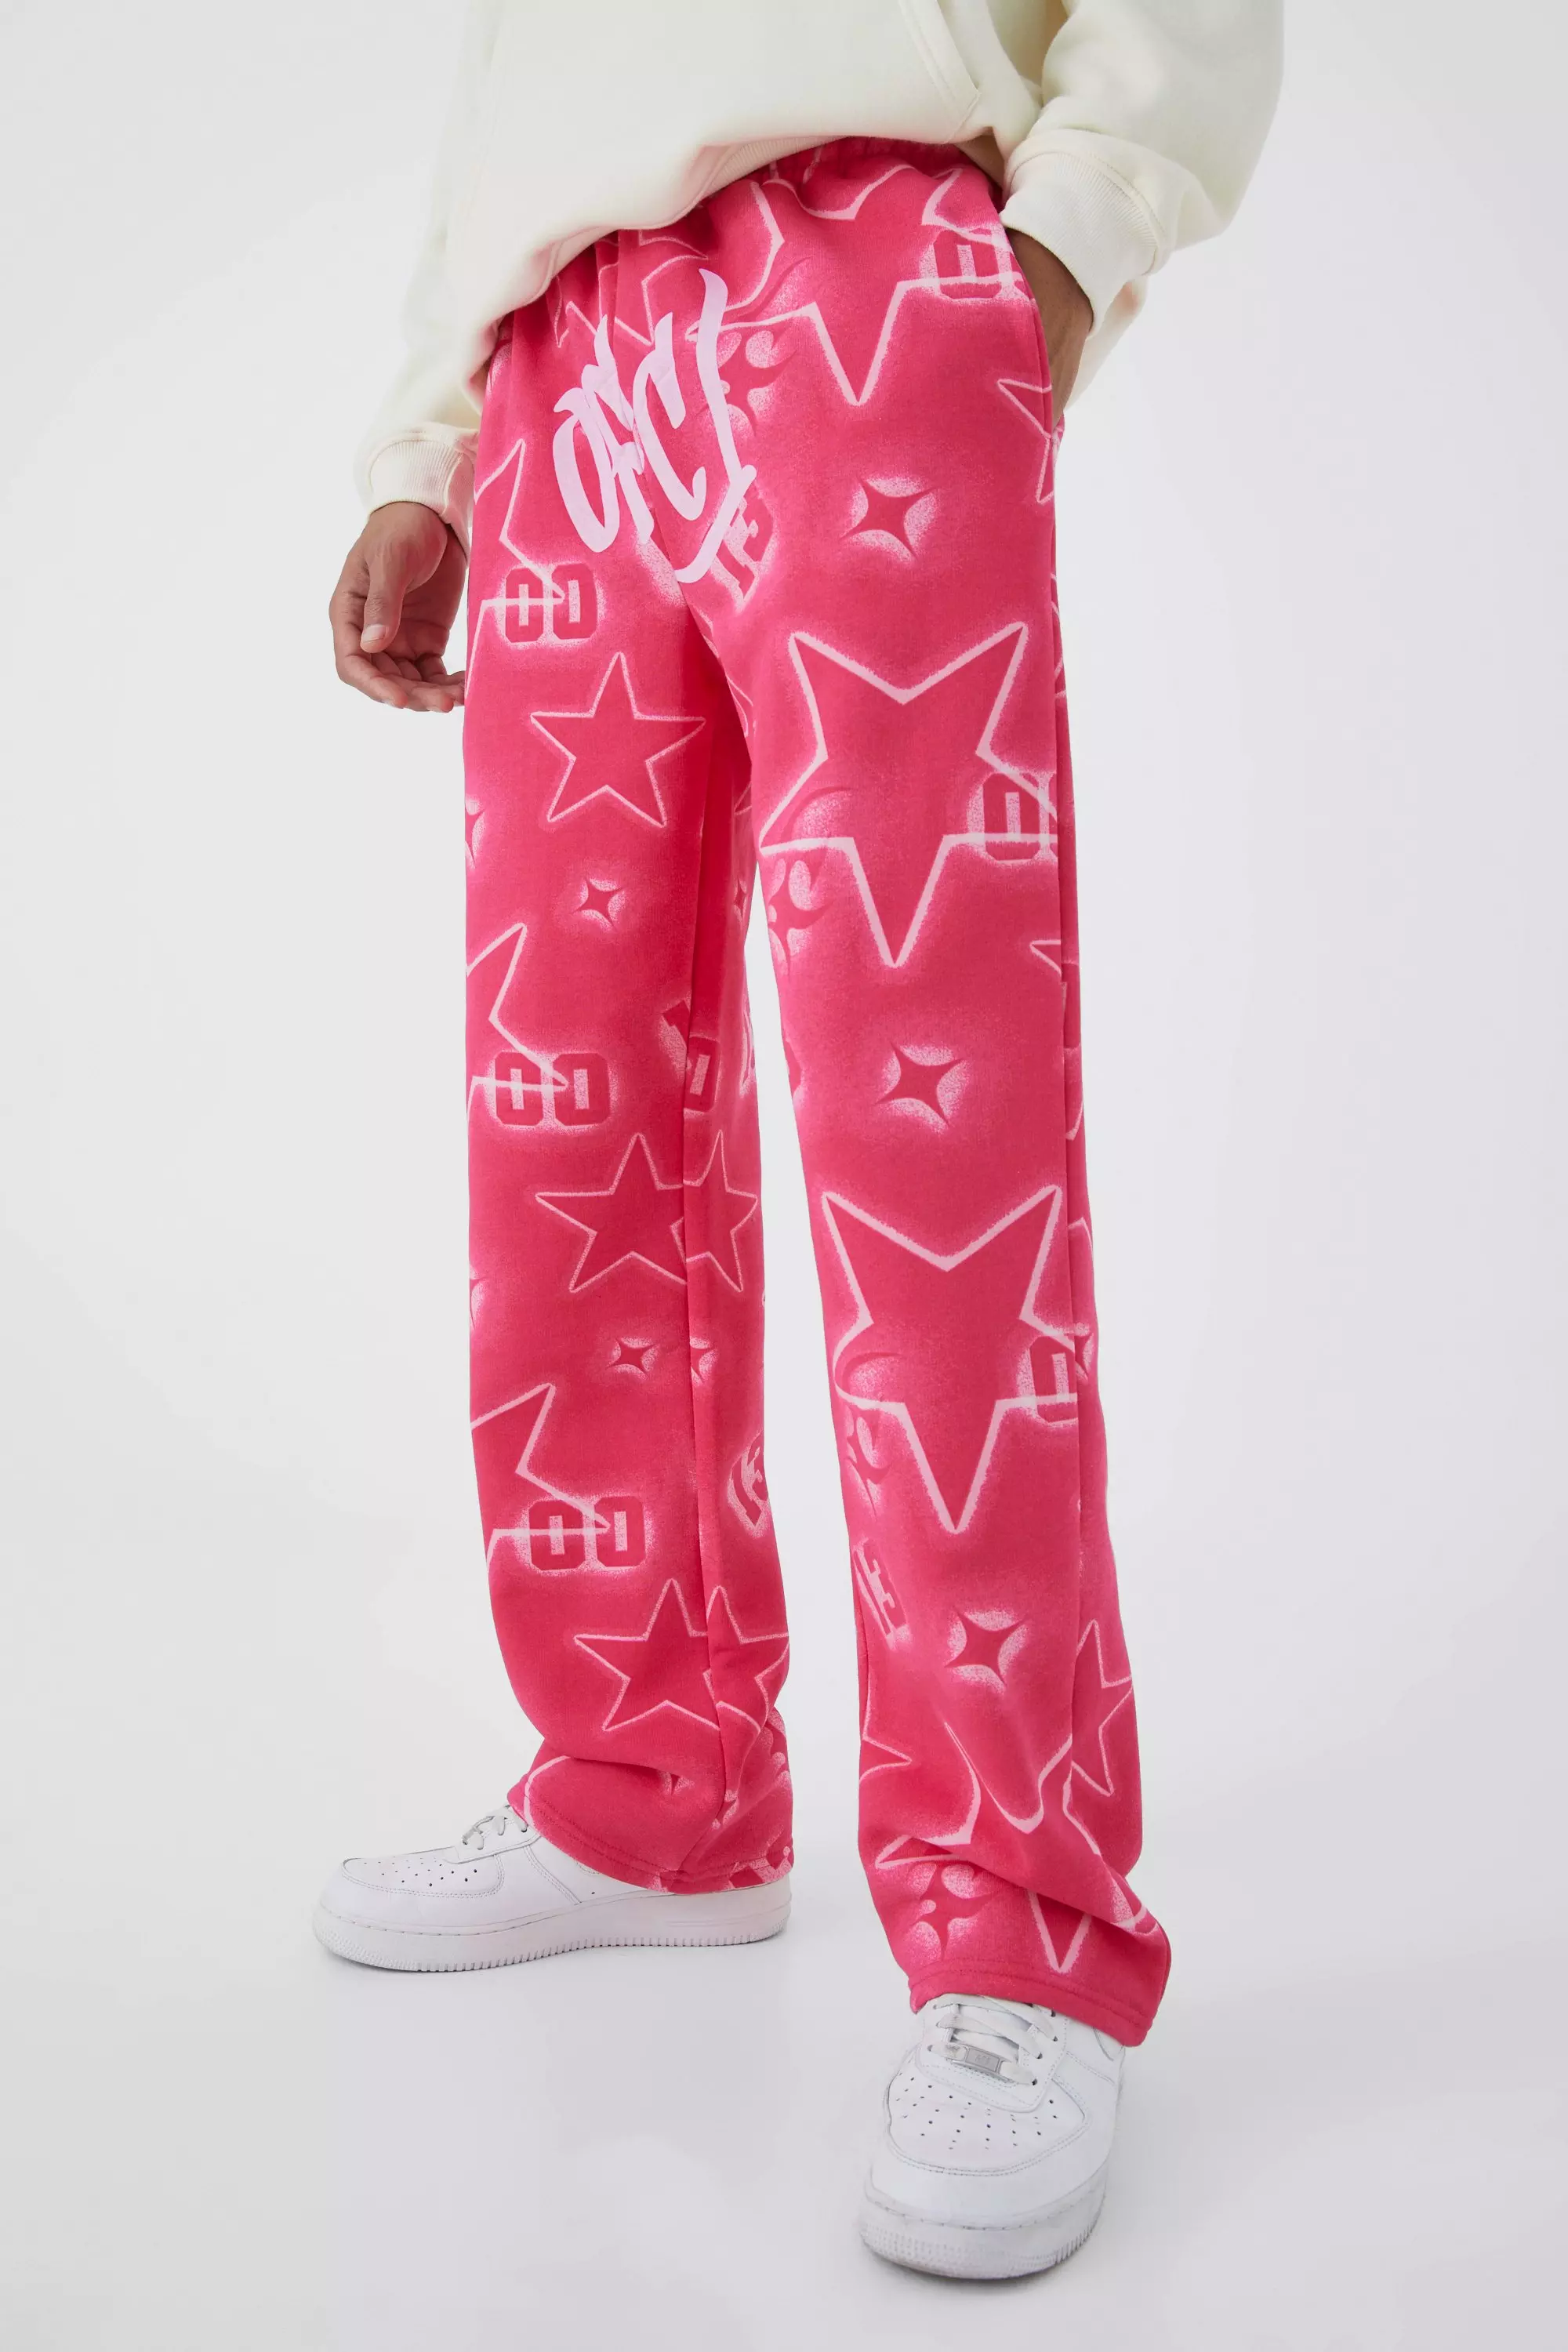 Empowering Pink Graffiti Women's Track Pants – Punk Majesty Streetwear